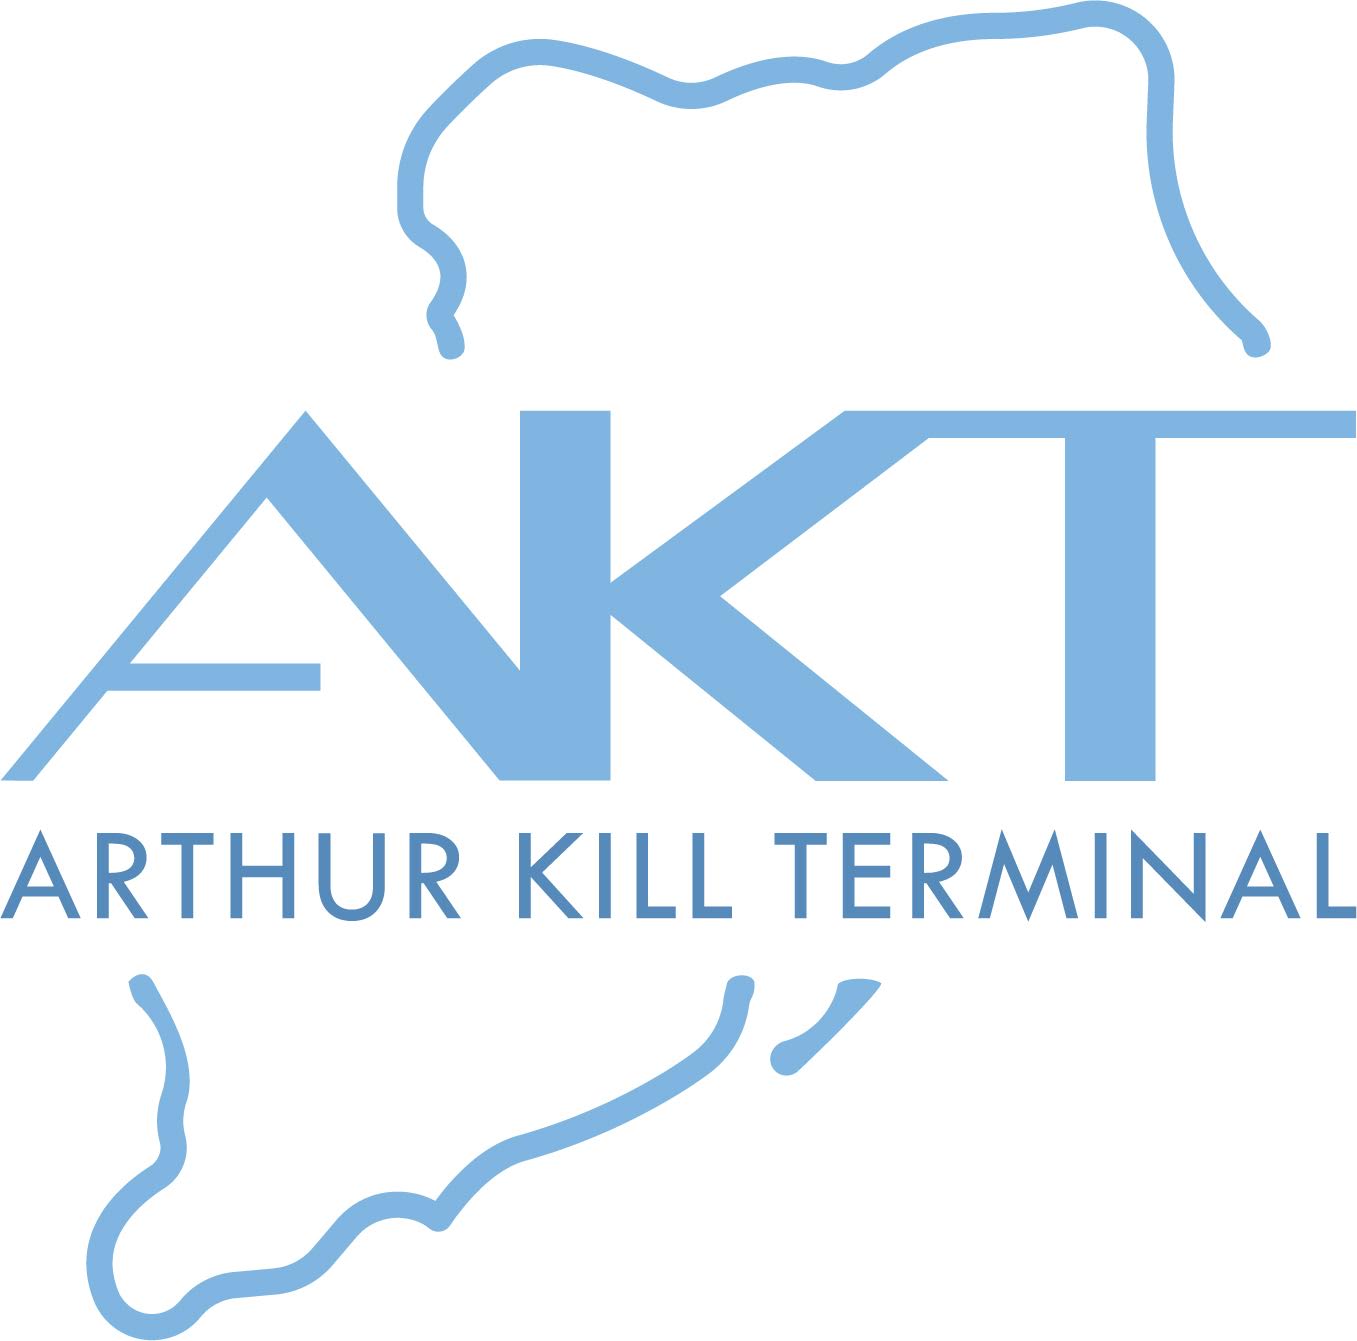 Arthur Kill terminal